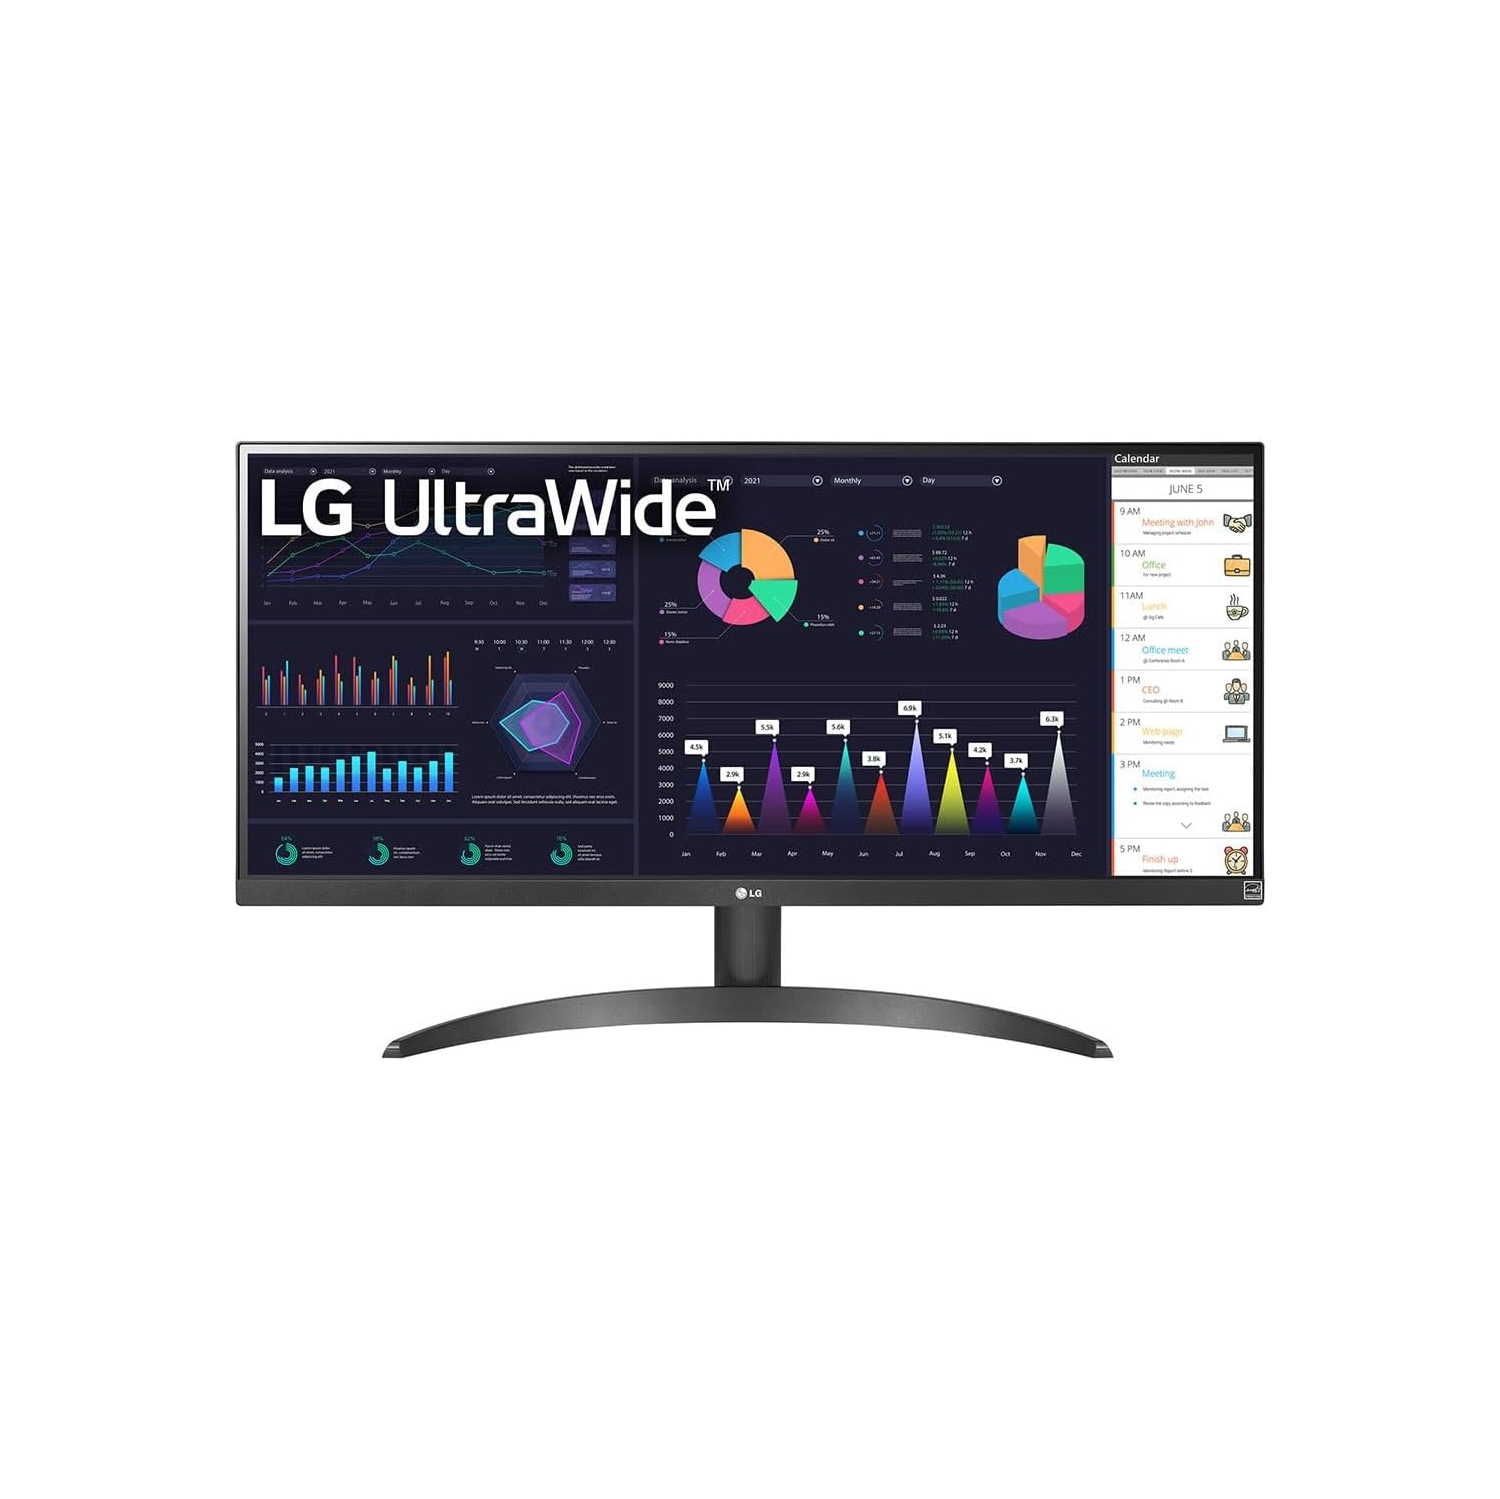 LG 29” UltraWide 21:9 FHD (2560 x 1080) IPS, 100Hz, HDR, sRGB 99%, FreeSync Monitor w/ Flicker safe & Reader Mode